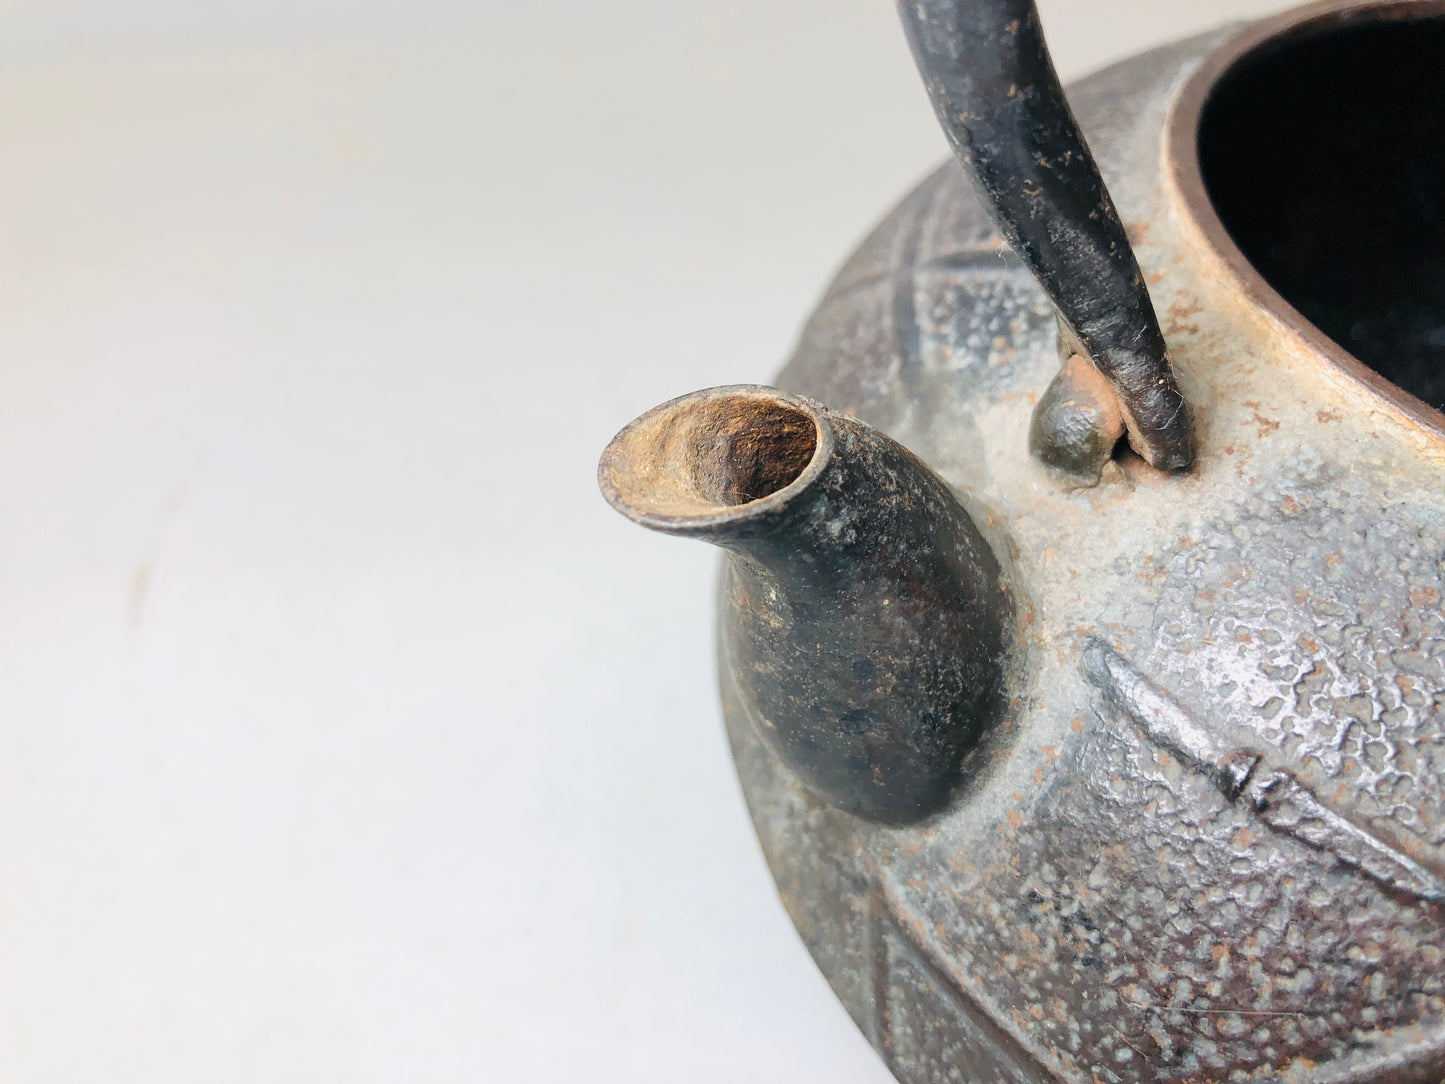 Y5868 TETSUBIN Iron kettle Nambu Nanbu ironware teapot pot Japan antique vintage